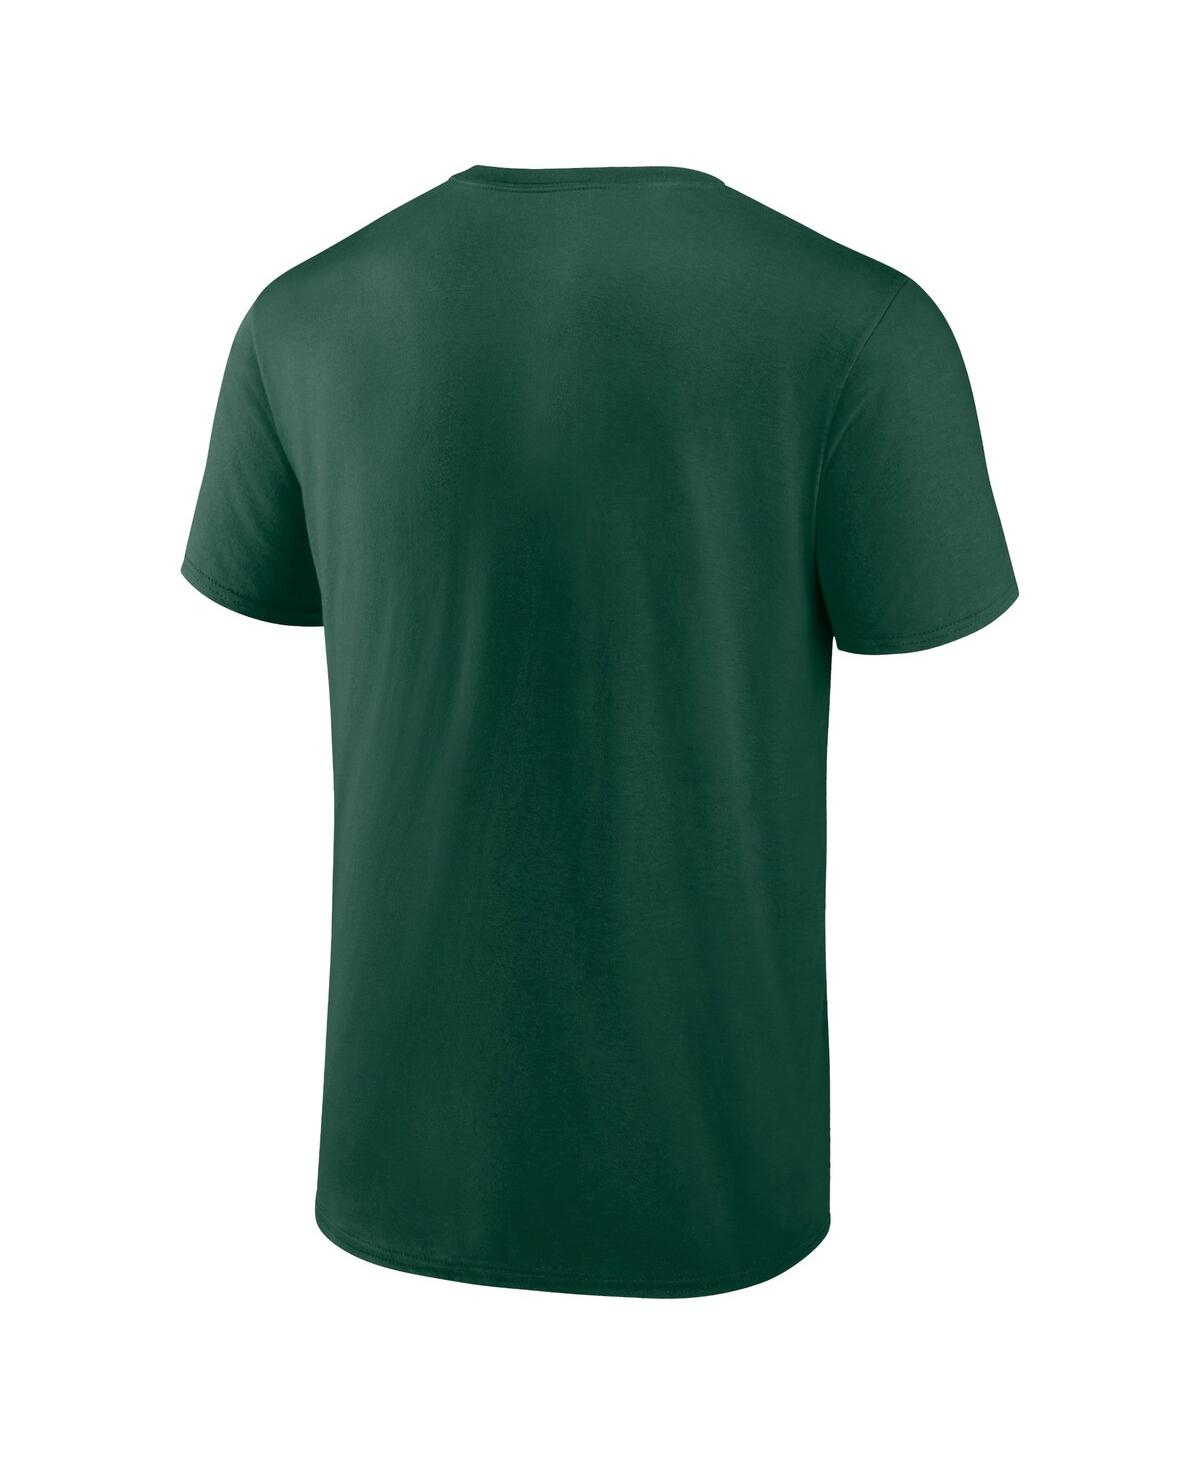 Shop Fanatics Men's  Green Ndsu Bison Campus T-shirt